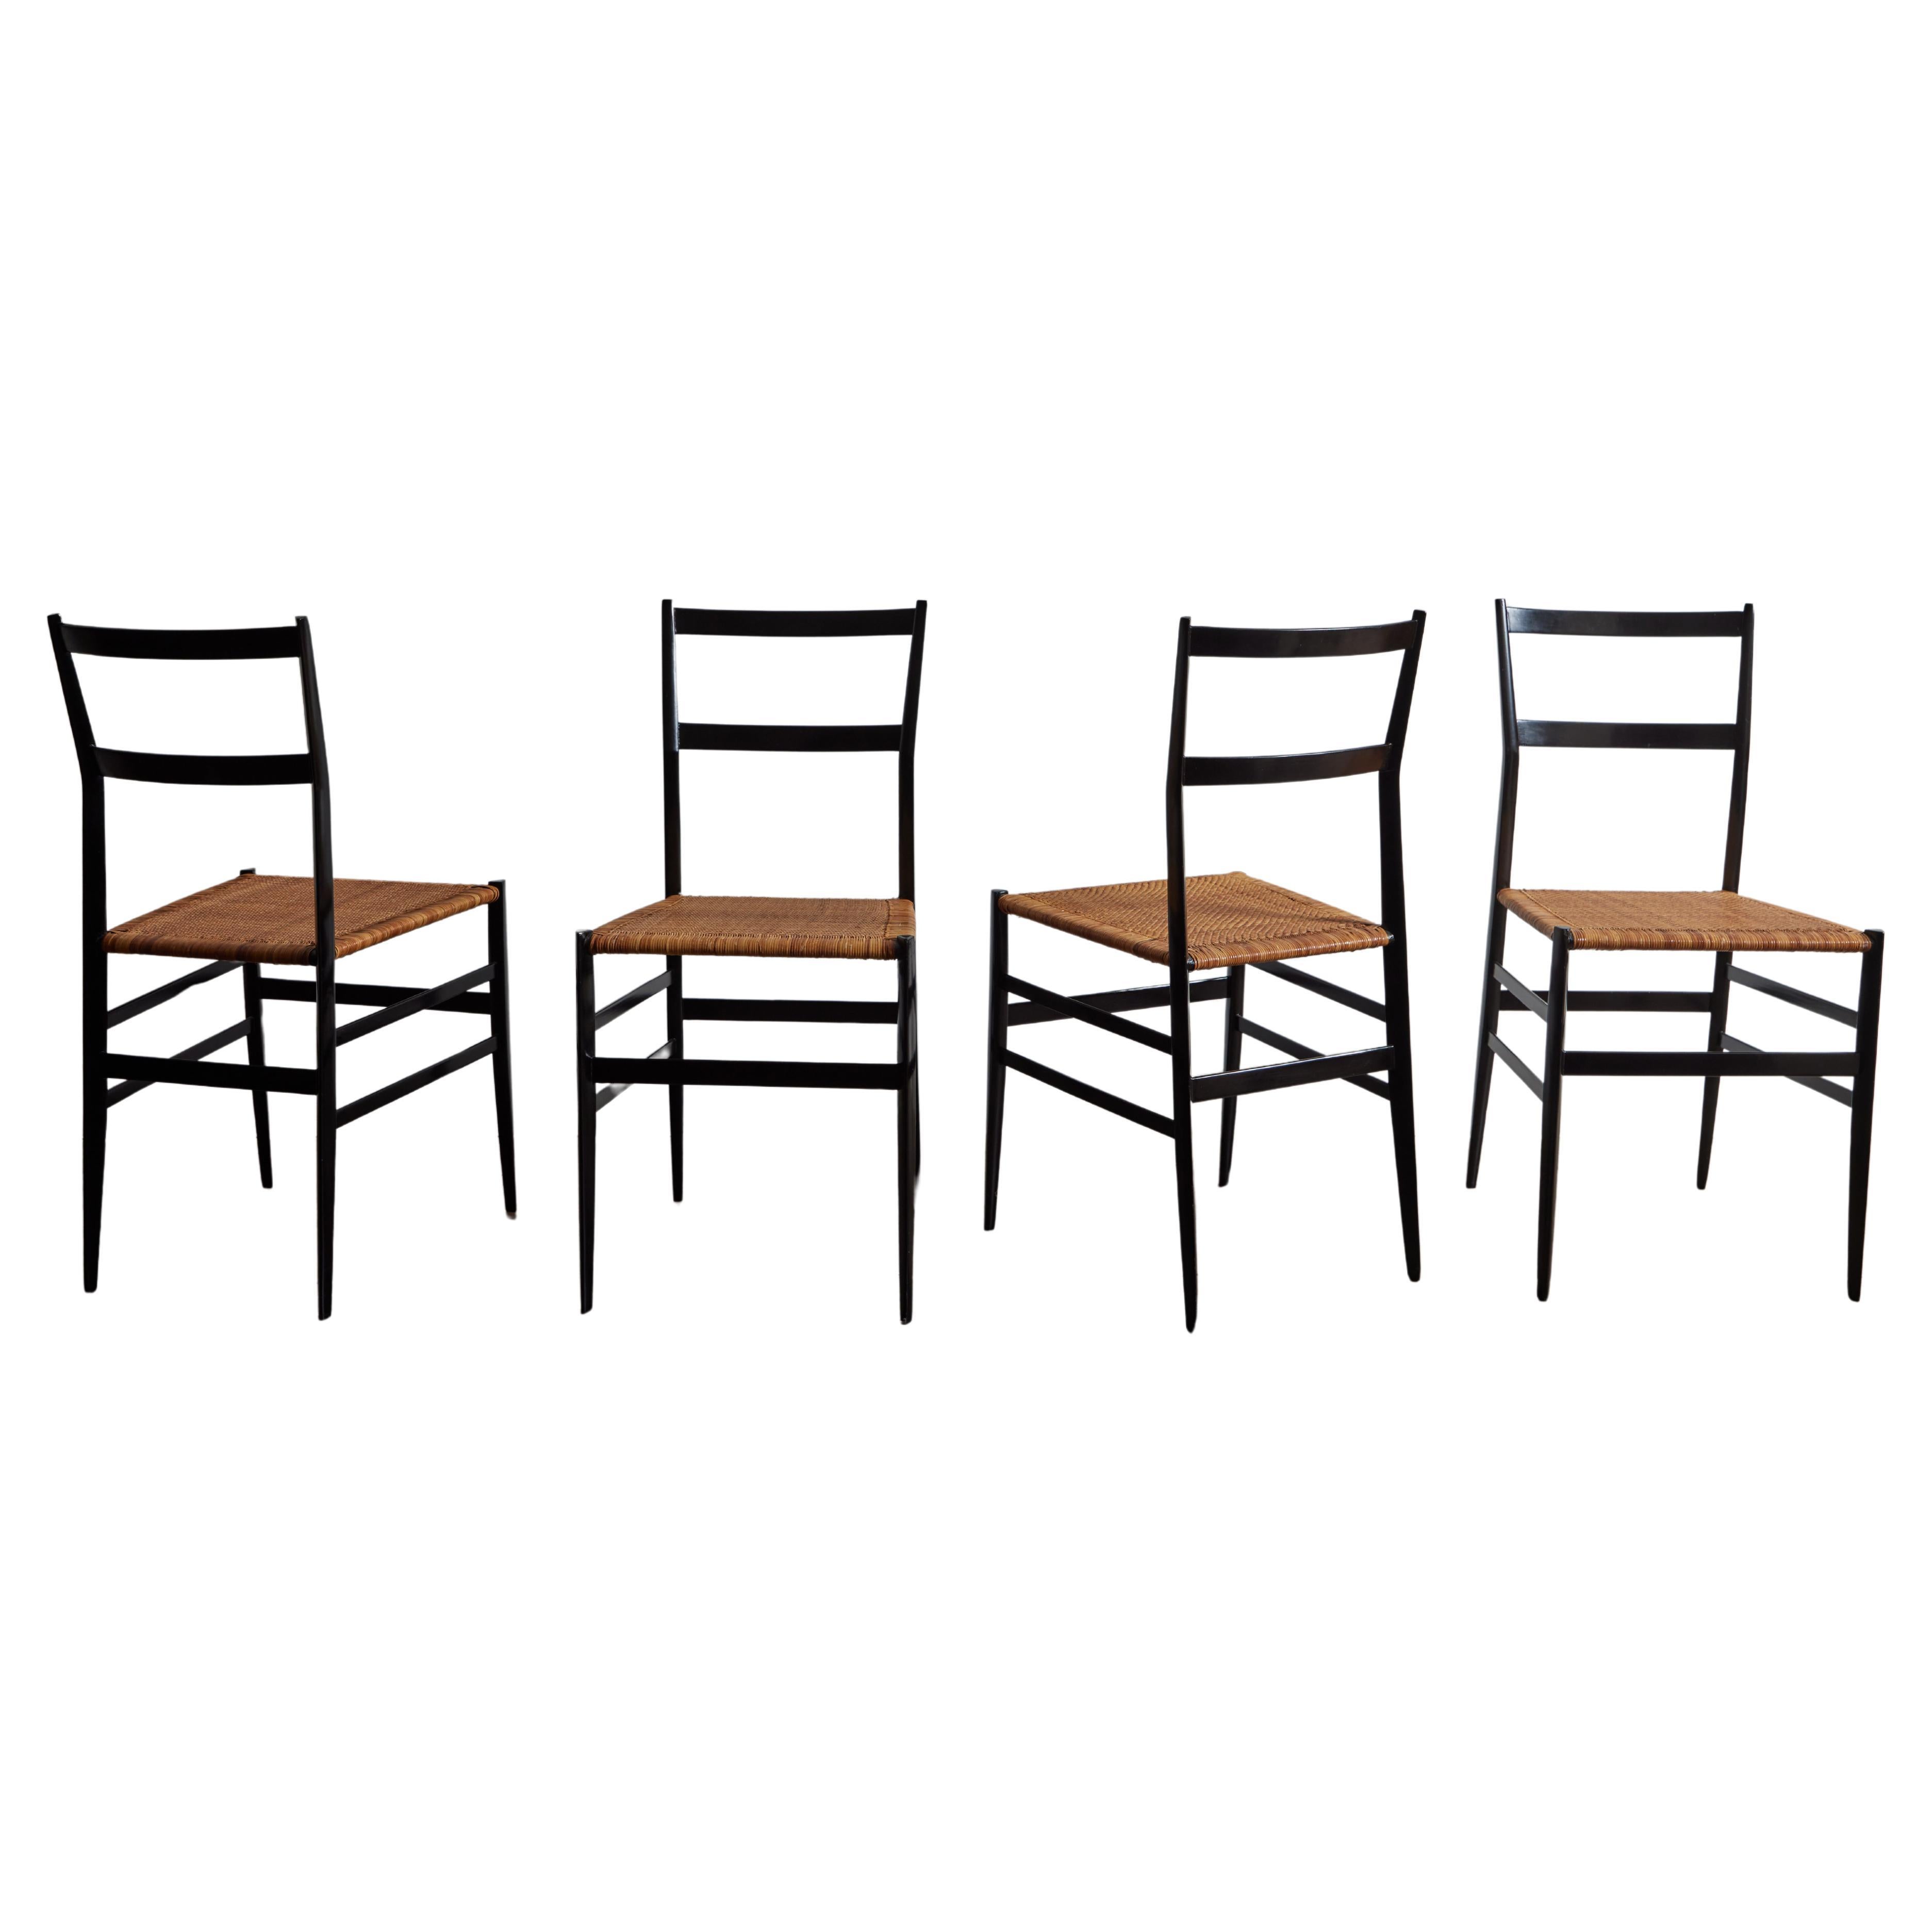 Early Set of Four Superleggera Chairs by Gio Ponti